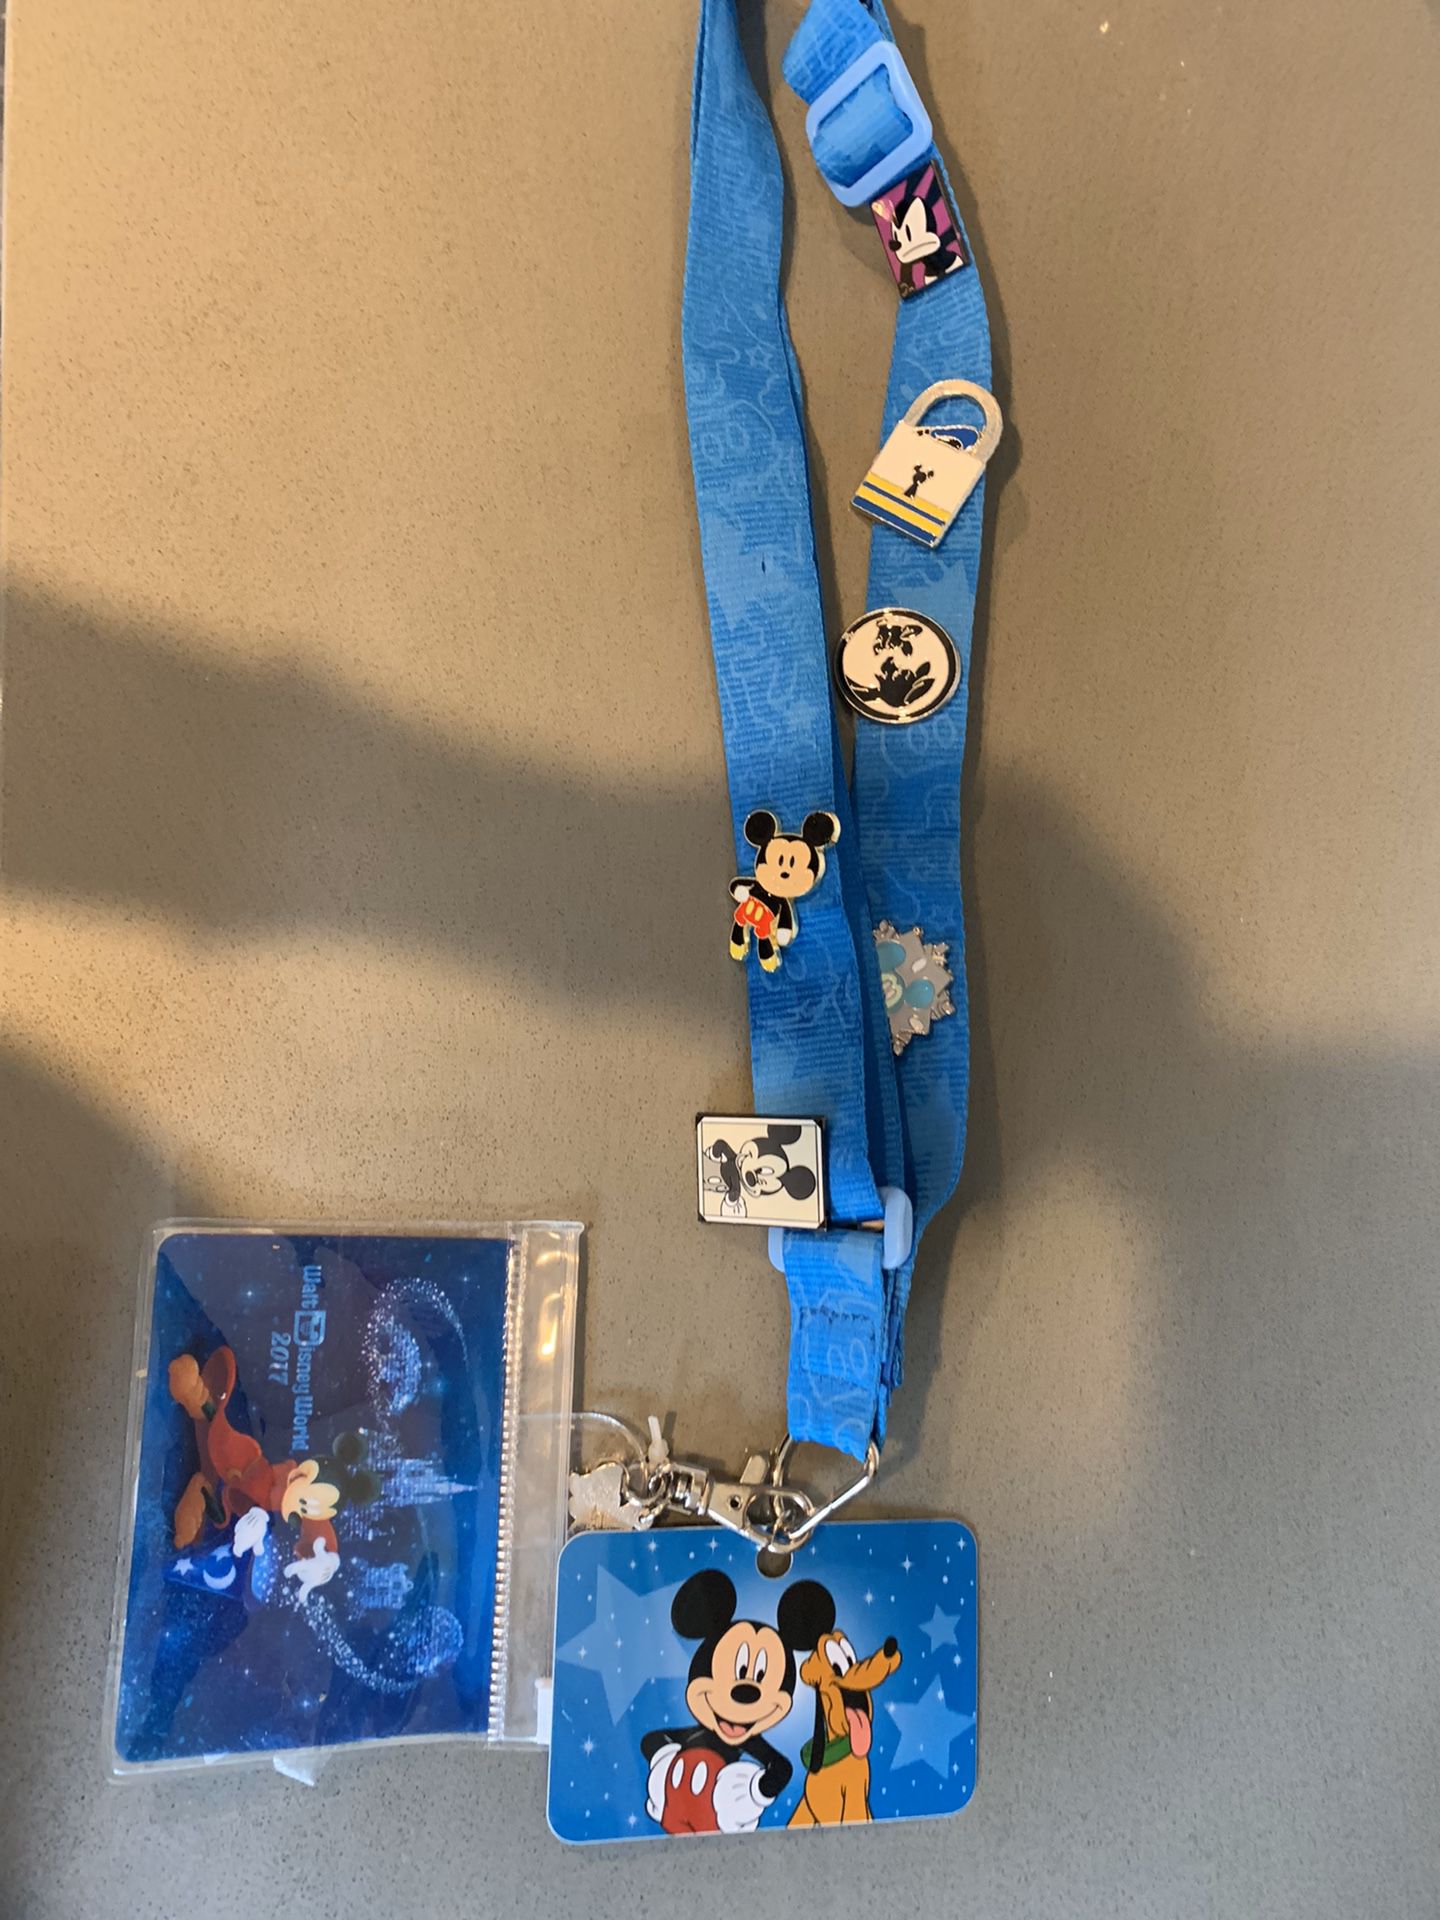 Disney lanyard with pins